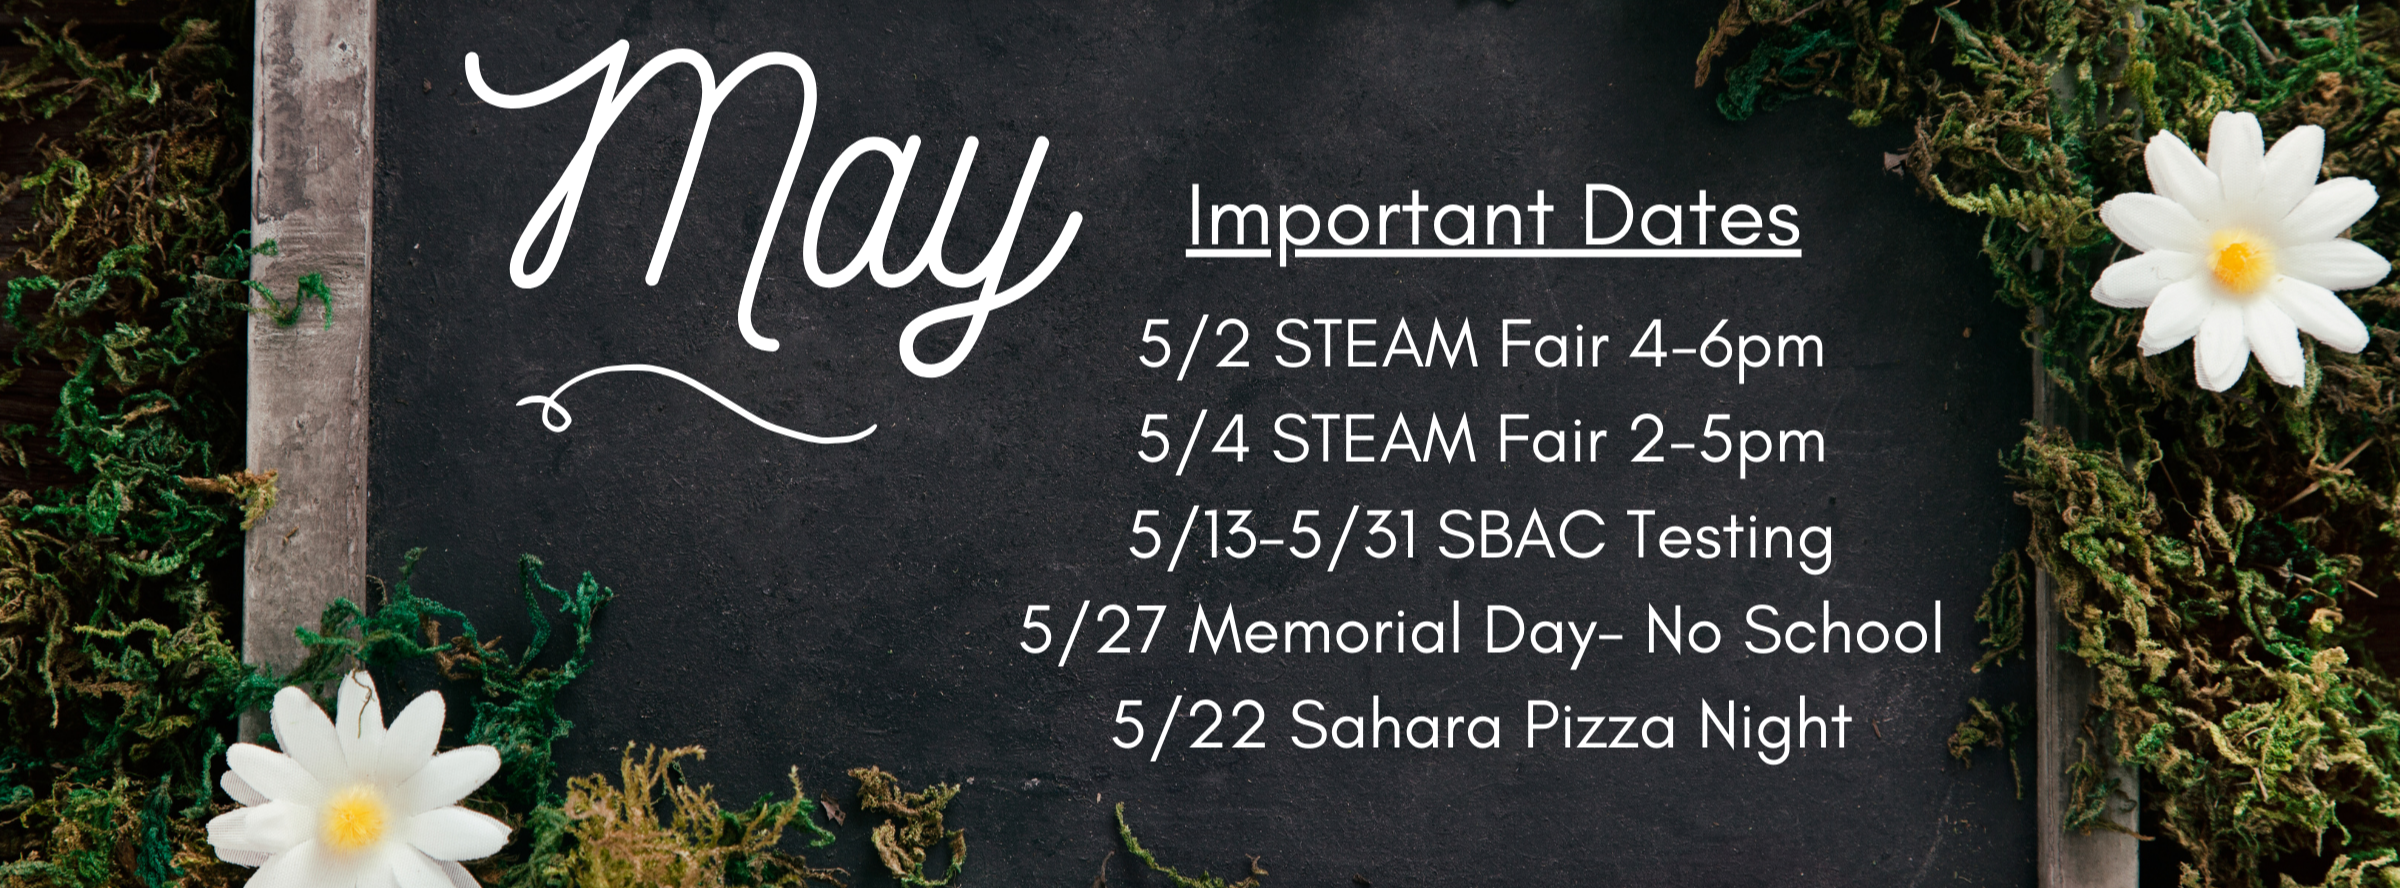 Important Dates in May: 5/2 STEAM Fair 4-6pm 5/4 STEAM Fair 2-5pm 5/13-5/31 SBAC Testing  5/27 Memorial Day- No School 5/22 Sahara Pizza Night